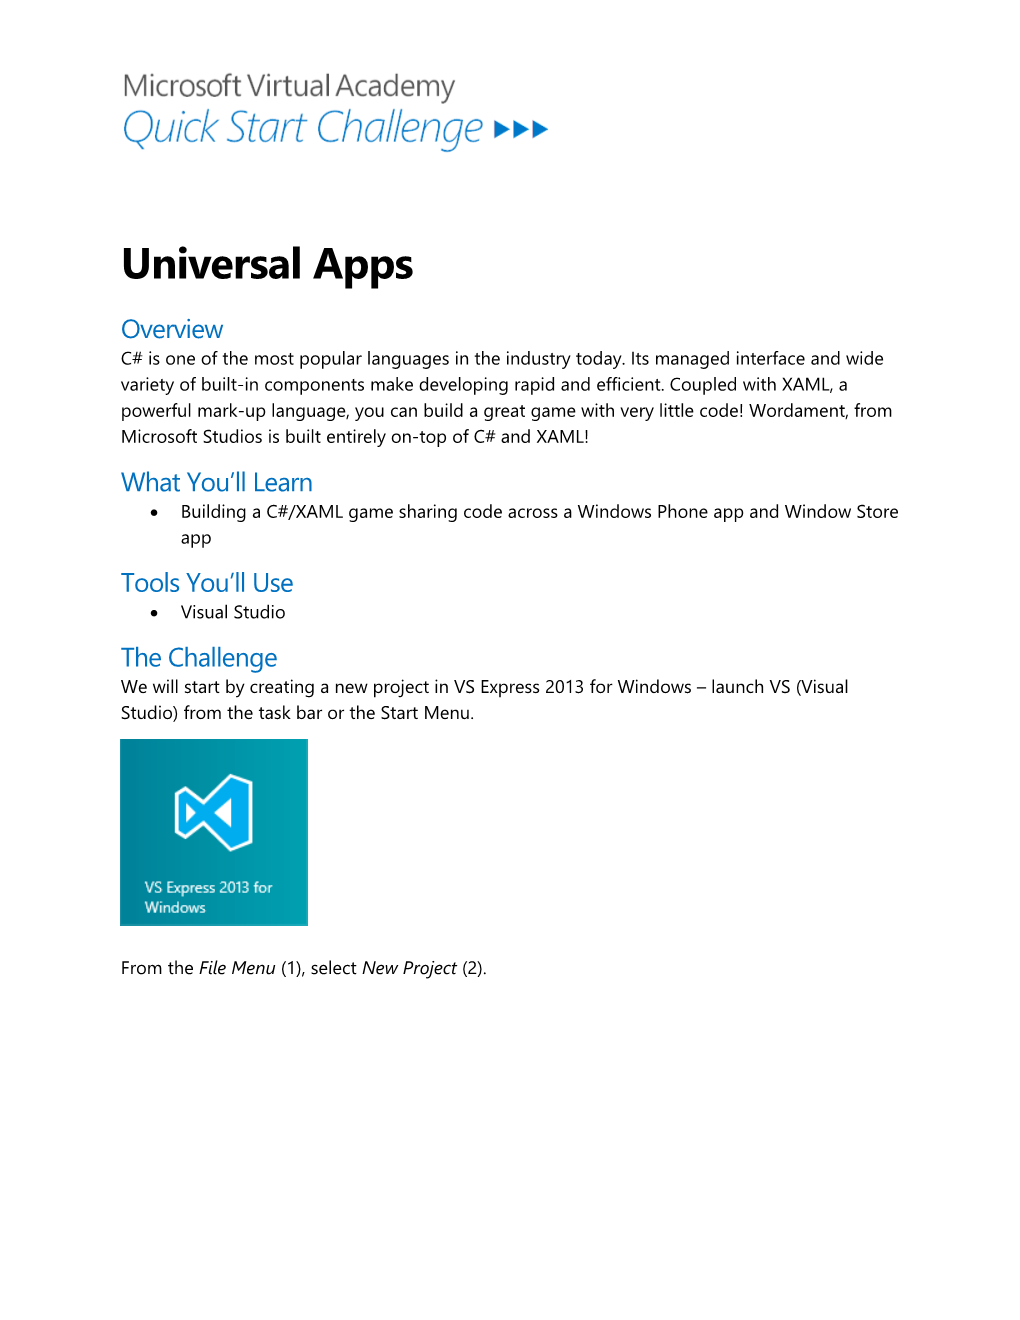 Universal Apps